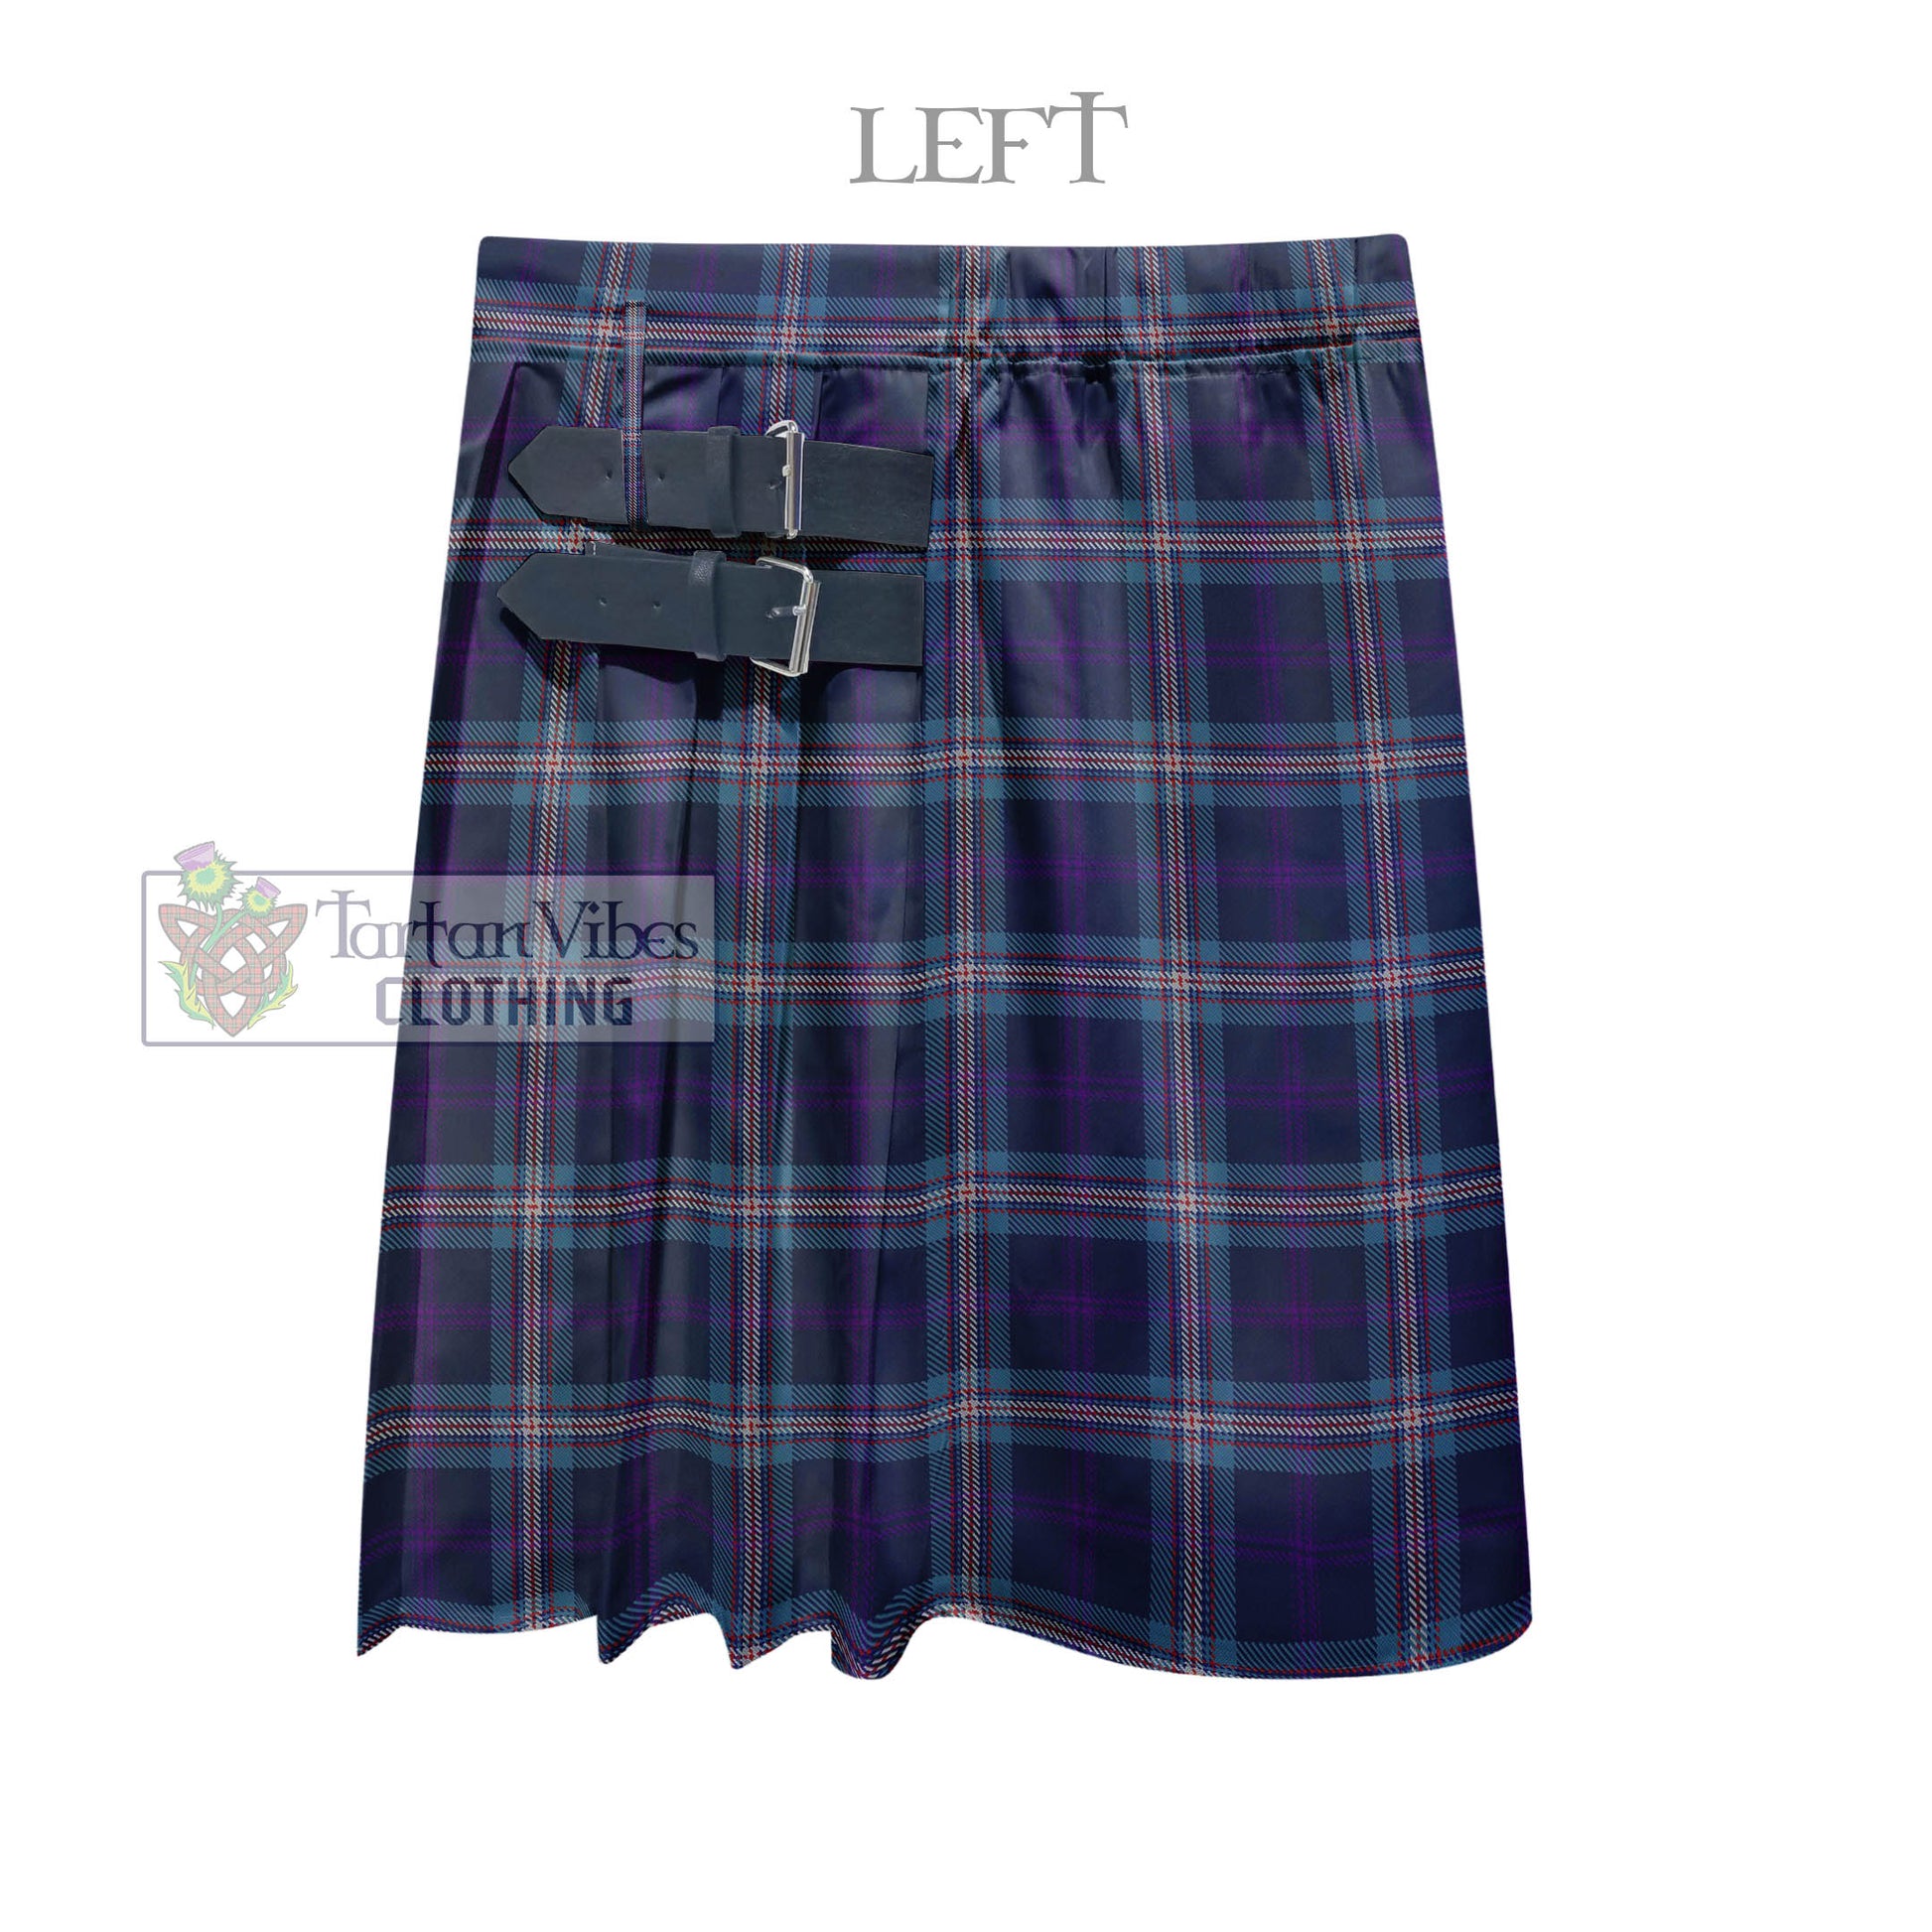 Tartan Vibes Clothing Nevoy Tartan Men's Pleated Skirt - Fashion Casual Retro Scottish Style